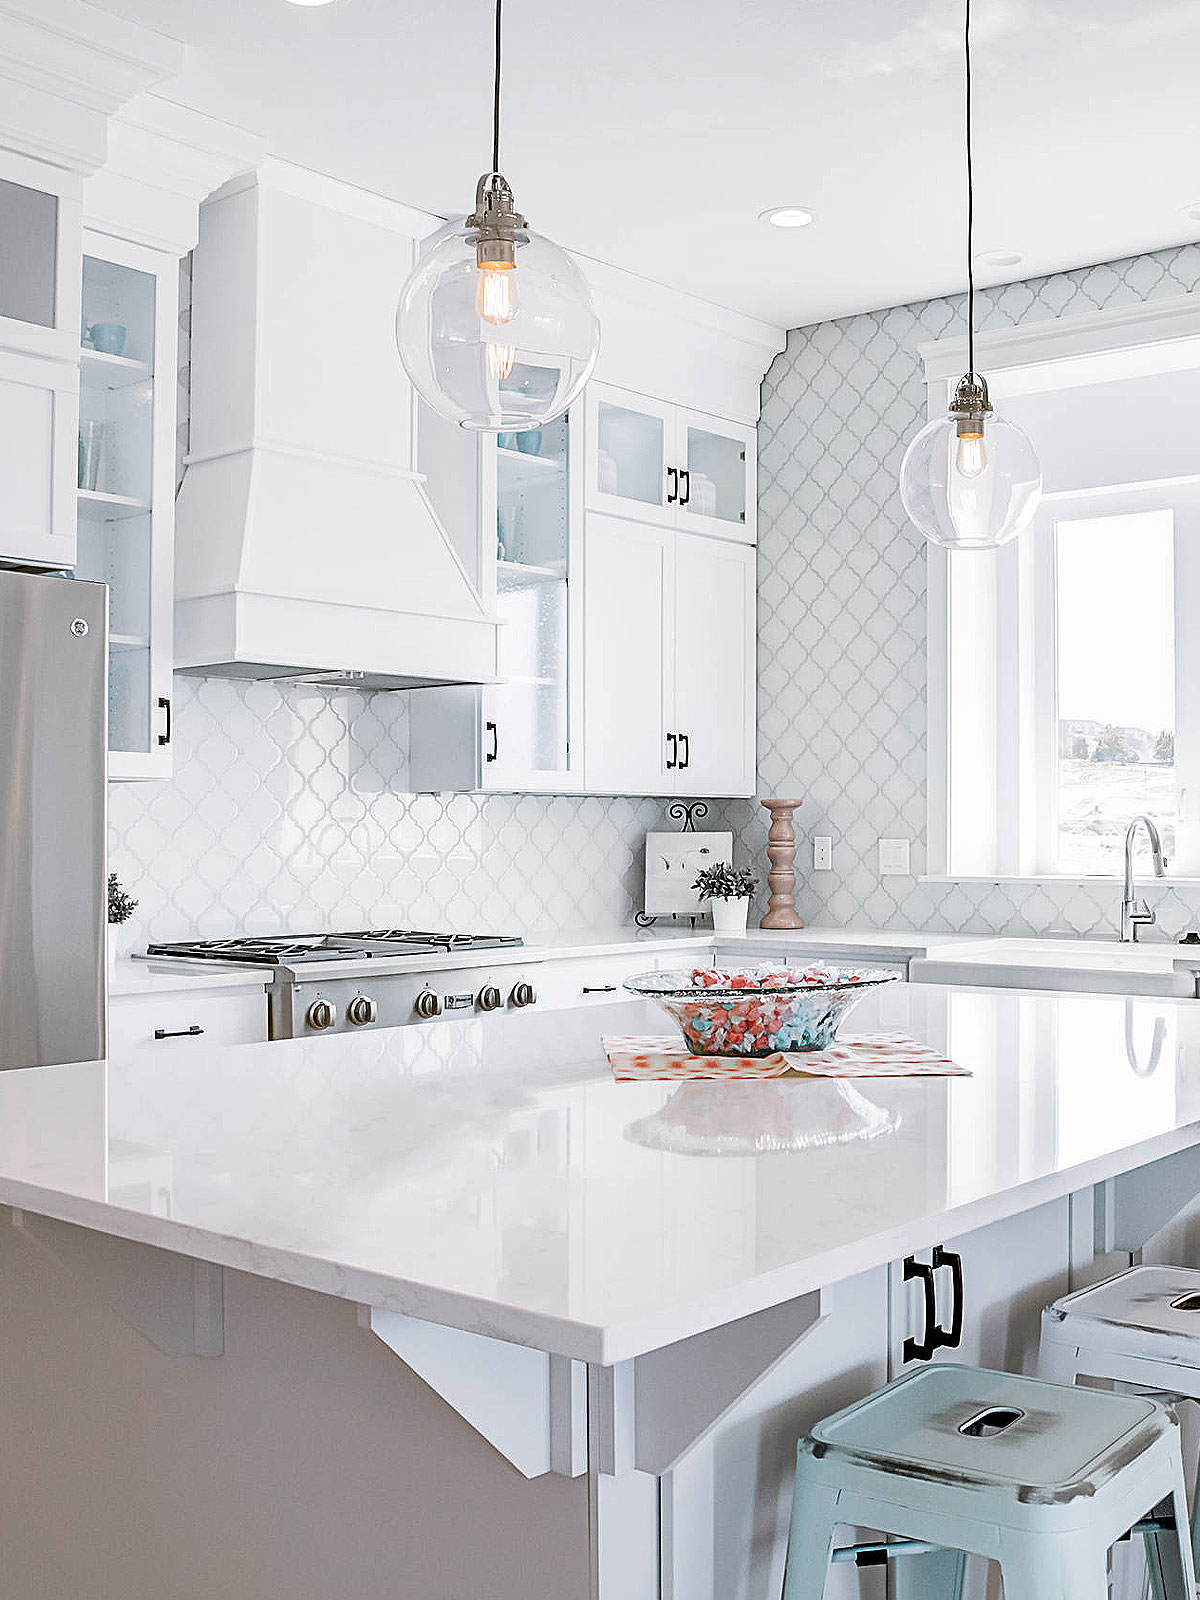 Modern white kitchen with arabesque backsplash tile